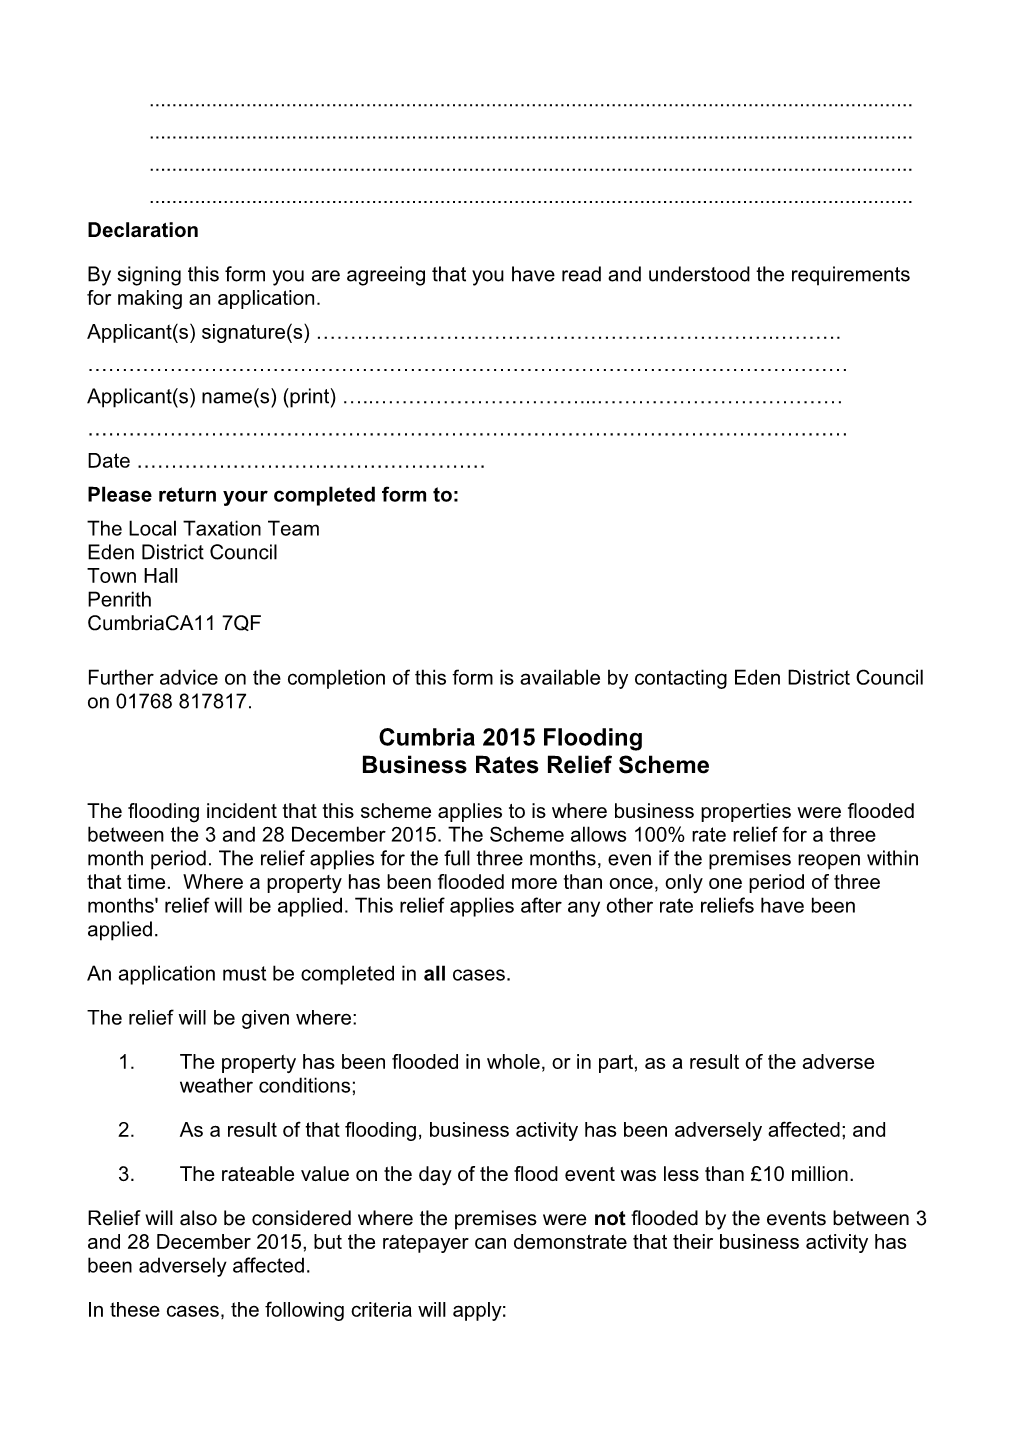 Cumbria 2015 Floodingbusiness Rates Relief Application Form